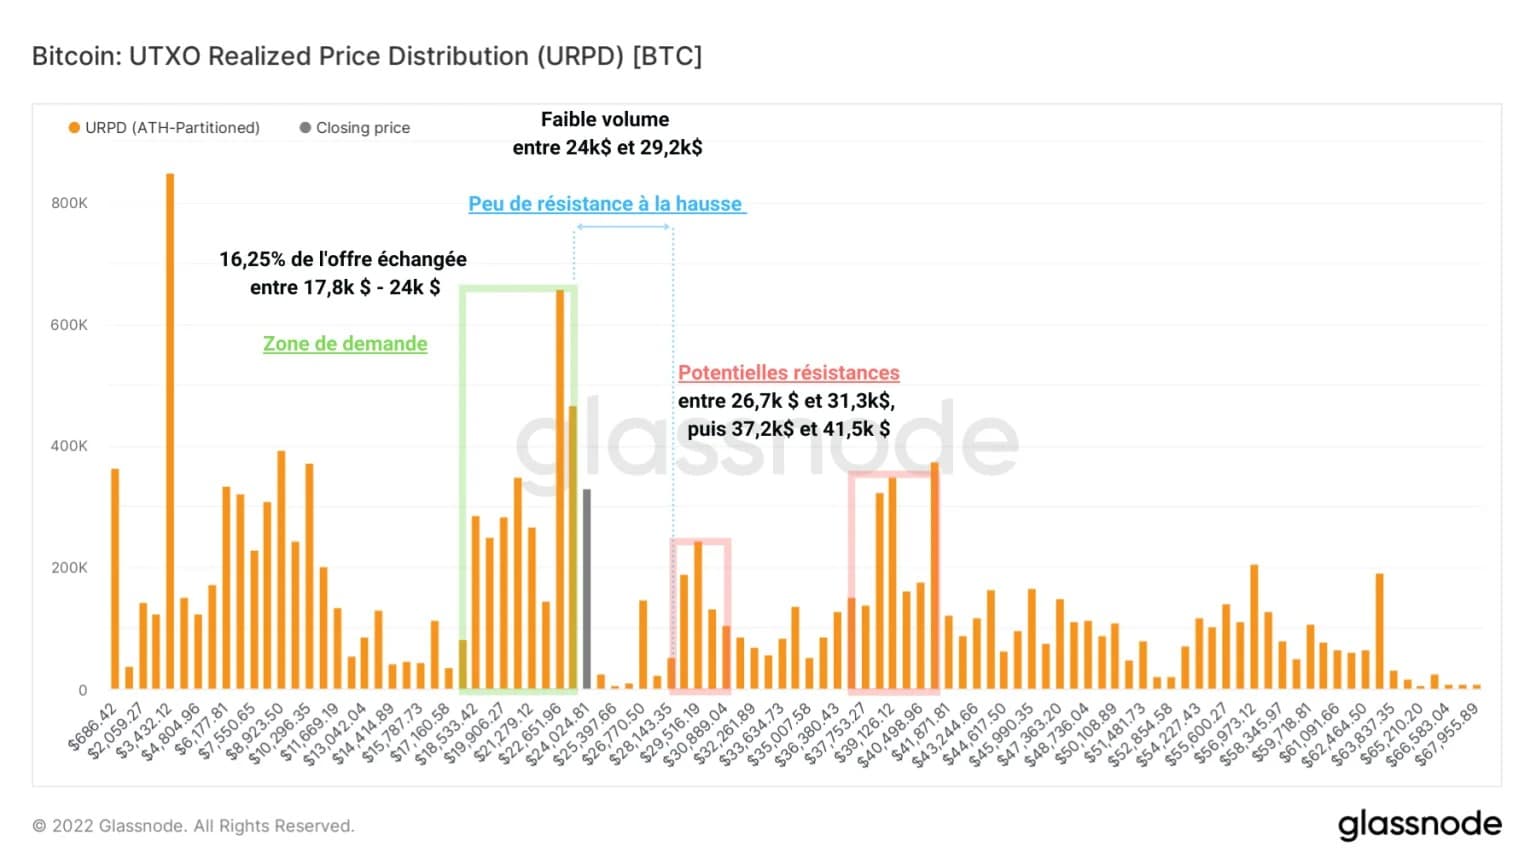 Figure 6: URPD - UTXO realised price distribution